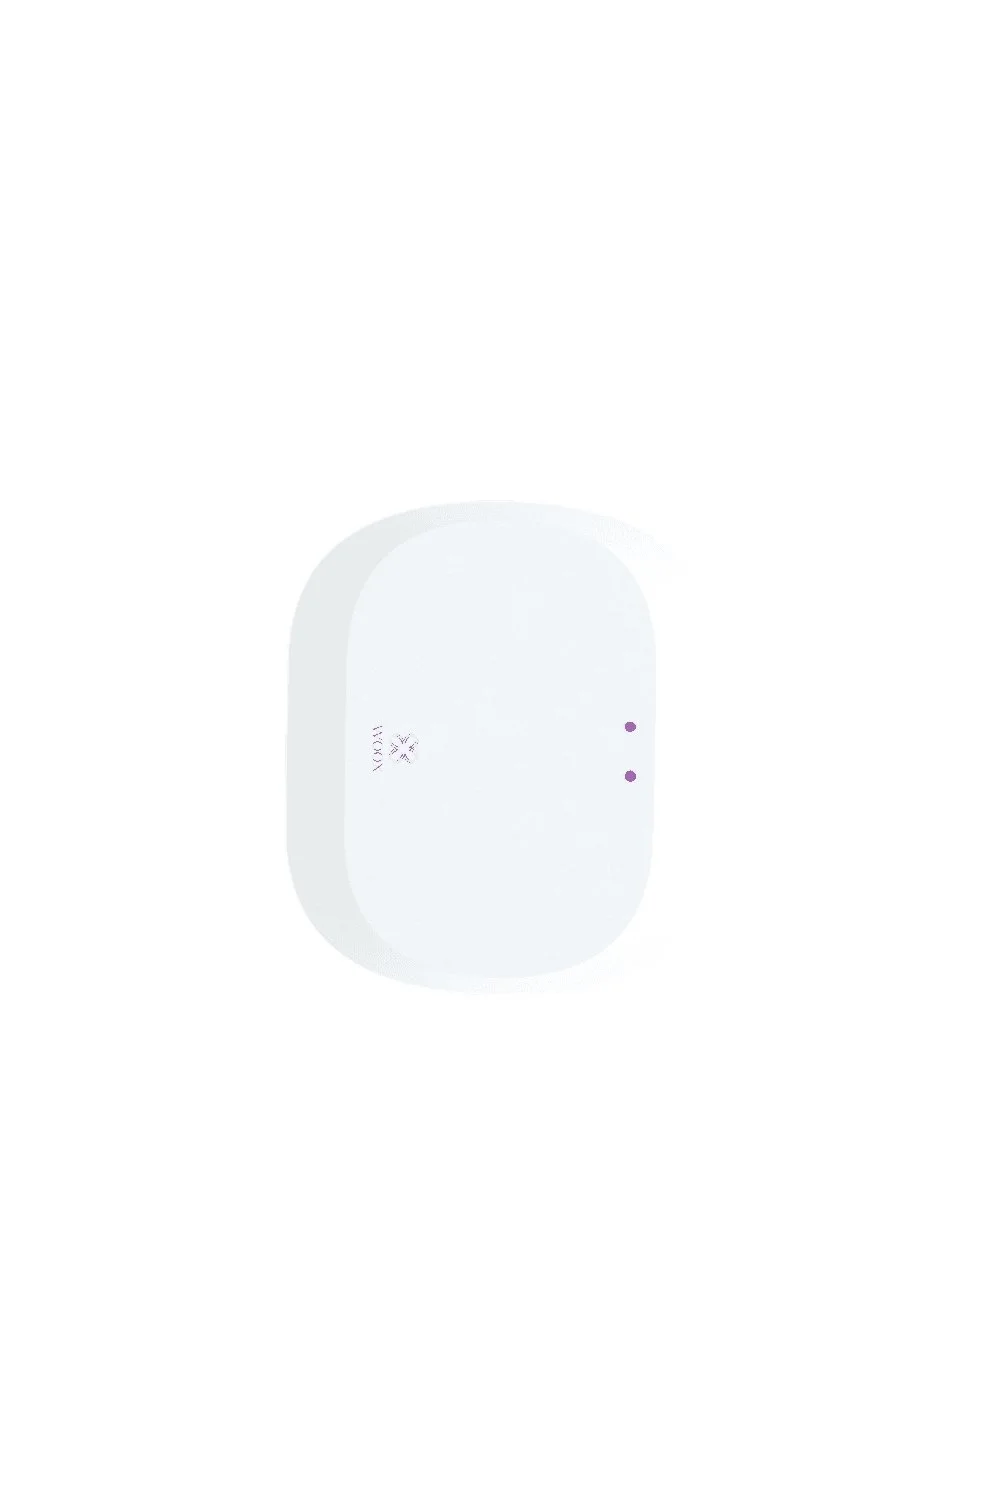 Woox безжичен контролер за умен дом Gateway - R7070 - Zigbee to Wi-Fi Gateway - image 1